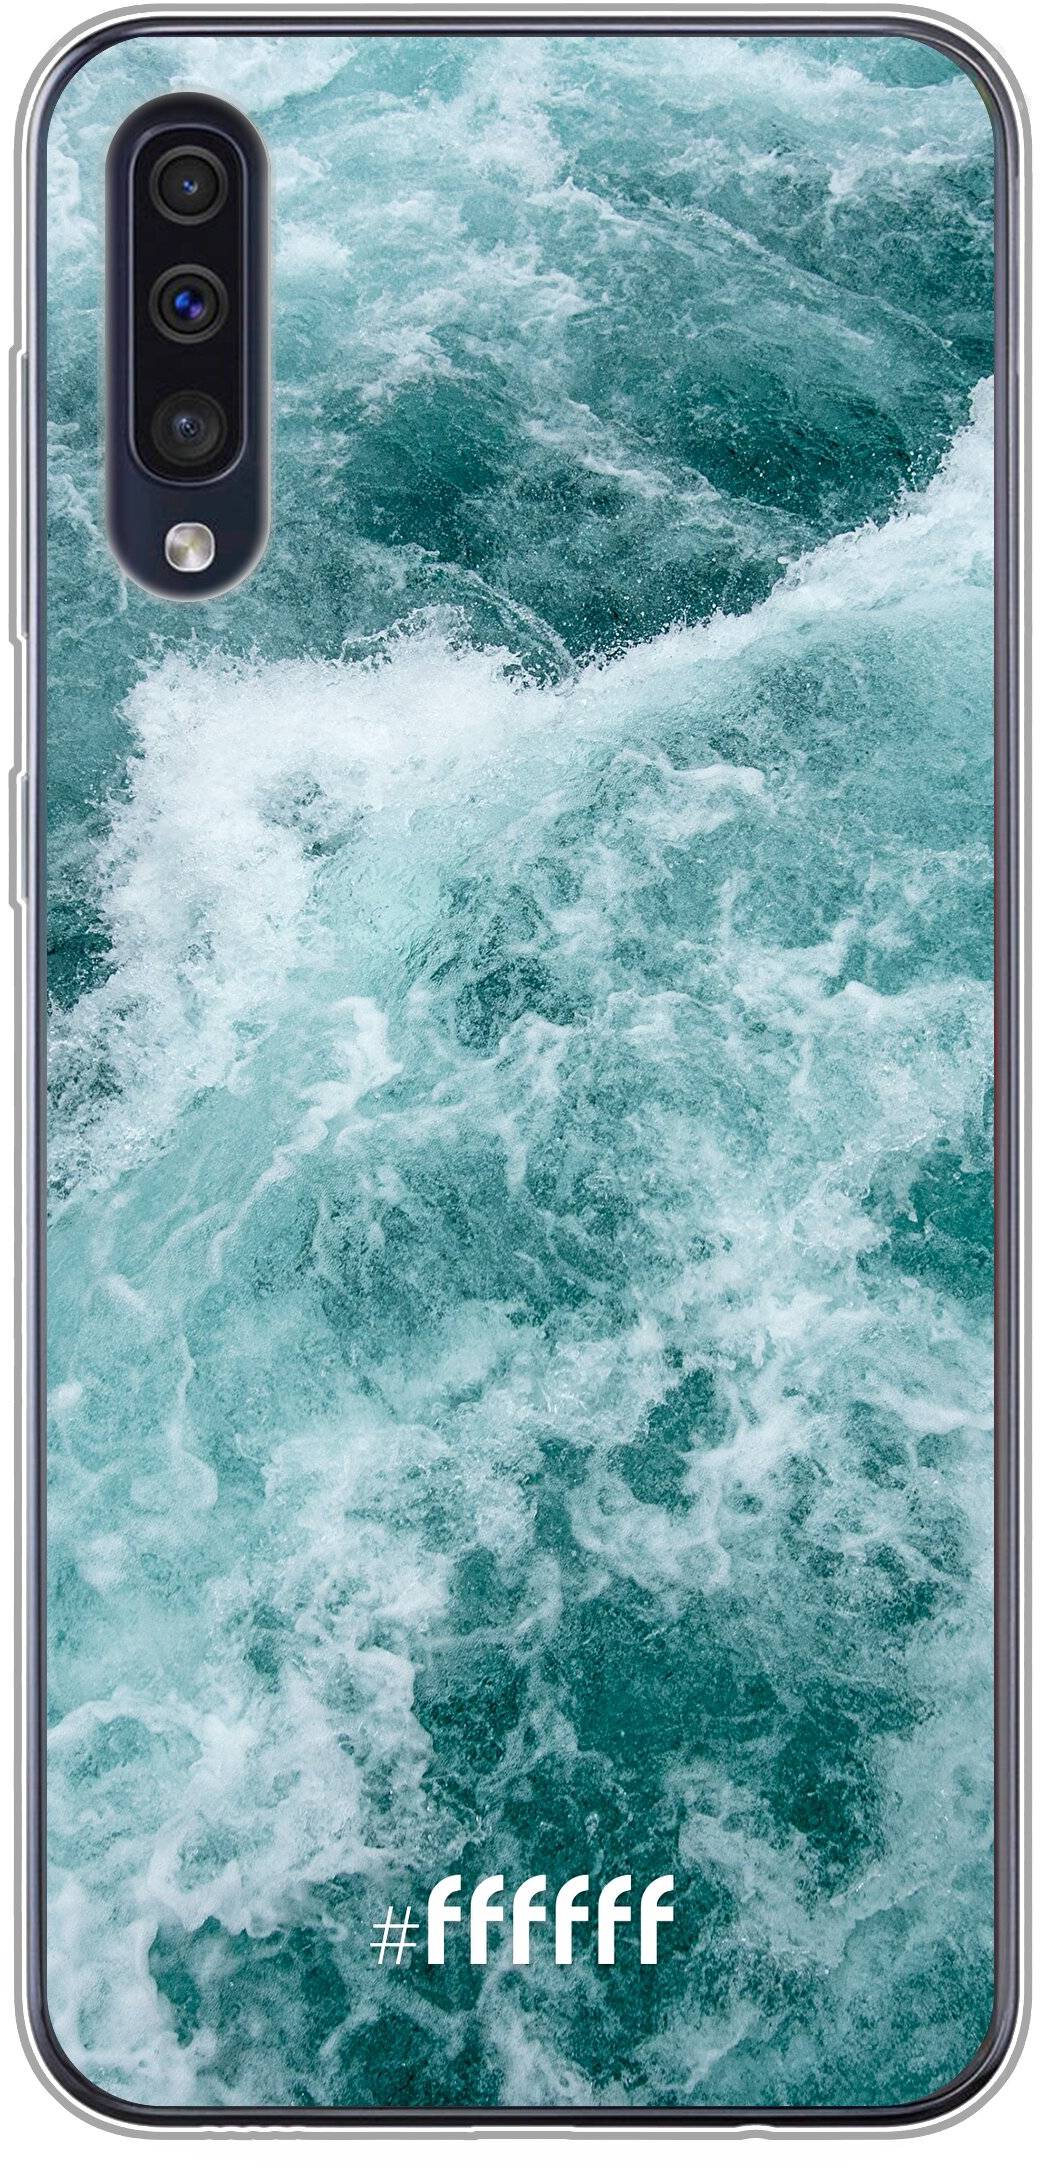 Whitecap Waves Galaxy A50s